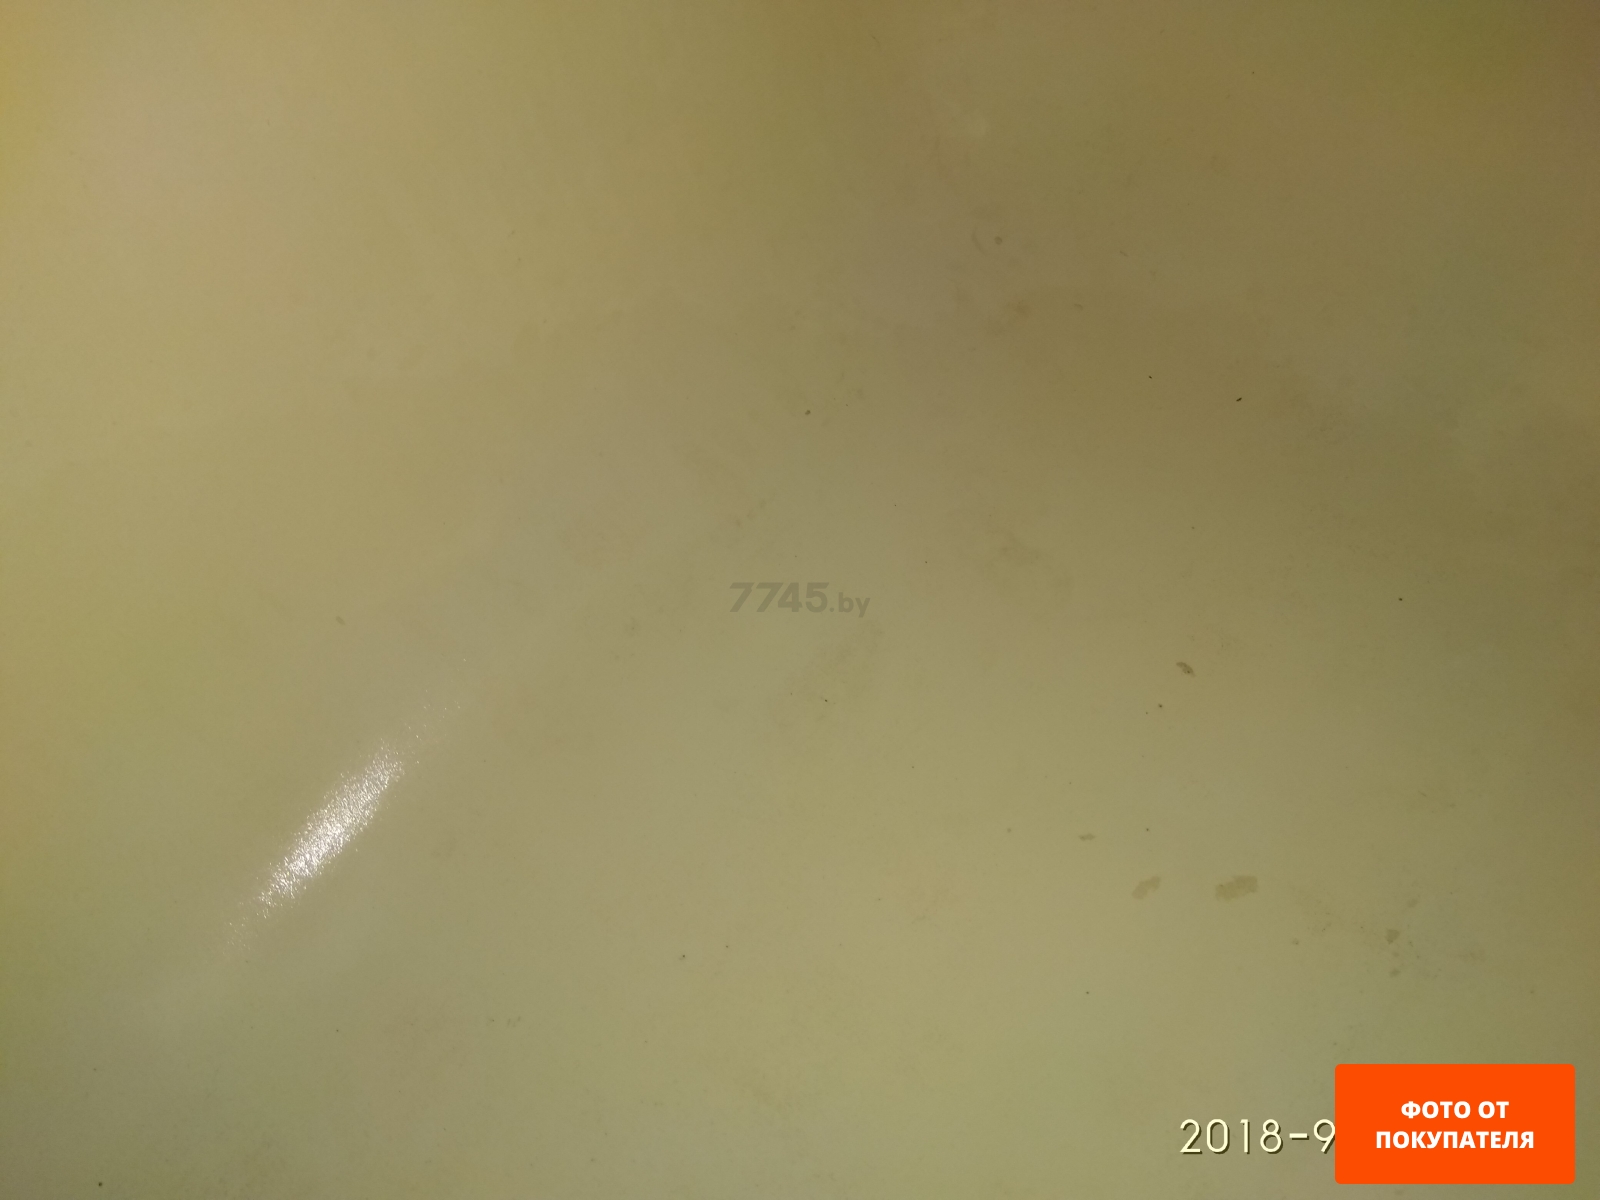 Средство чистящее для ванны SARMA Антиржавчина 0,5 л (8328) - Фото 3